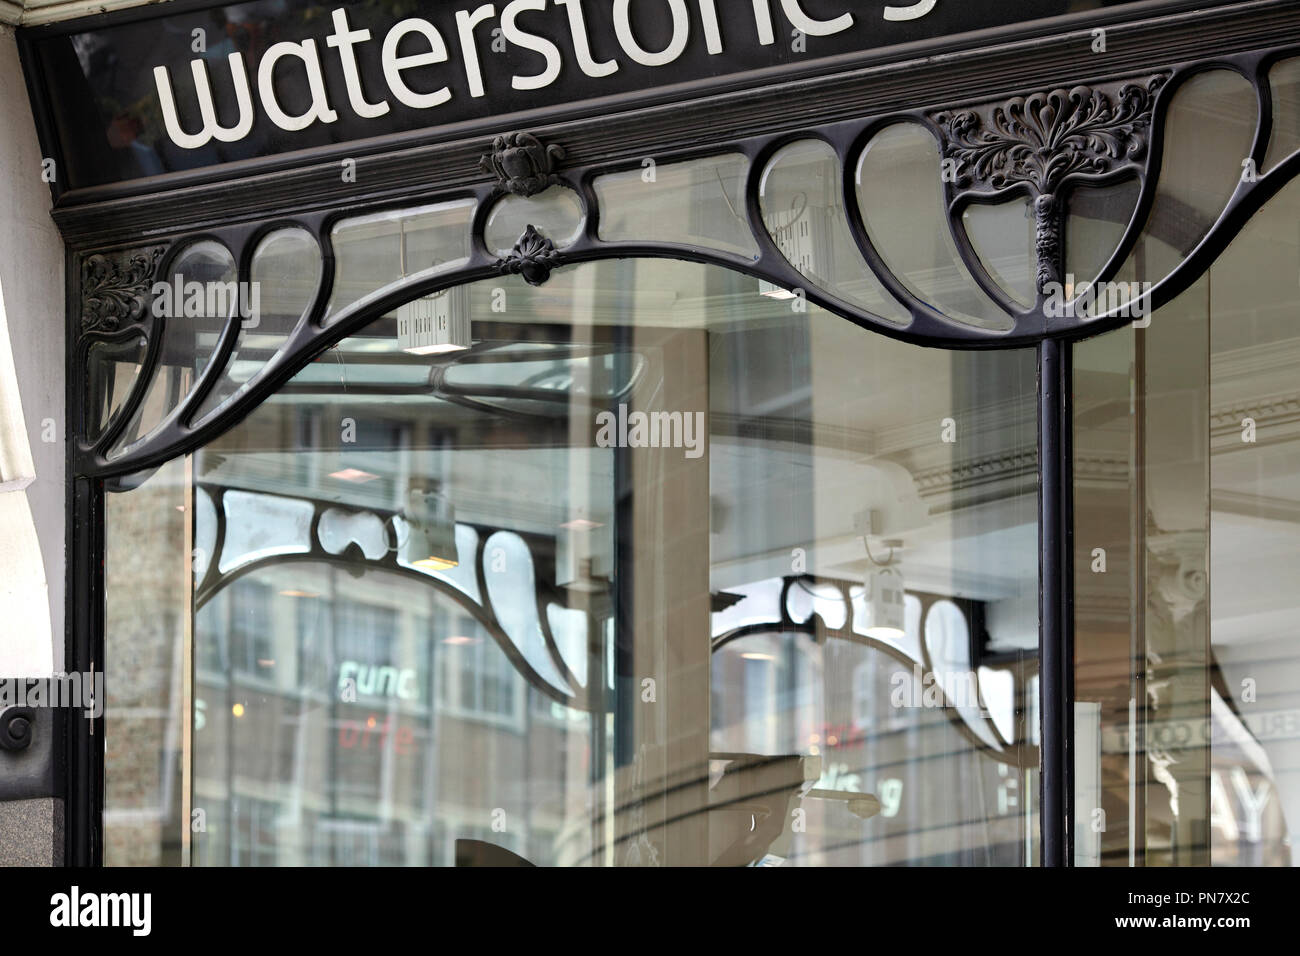 Art Nouveau window details on Waterstone's bookshop, Newcastle upon Tyne. Stock Photo